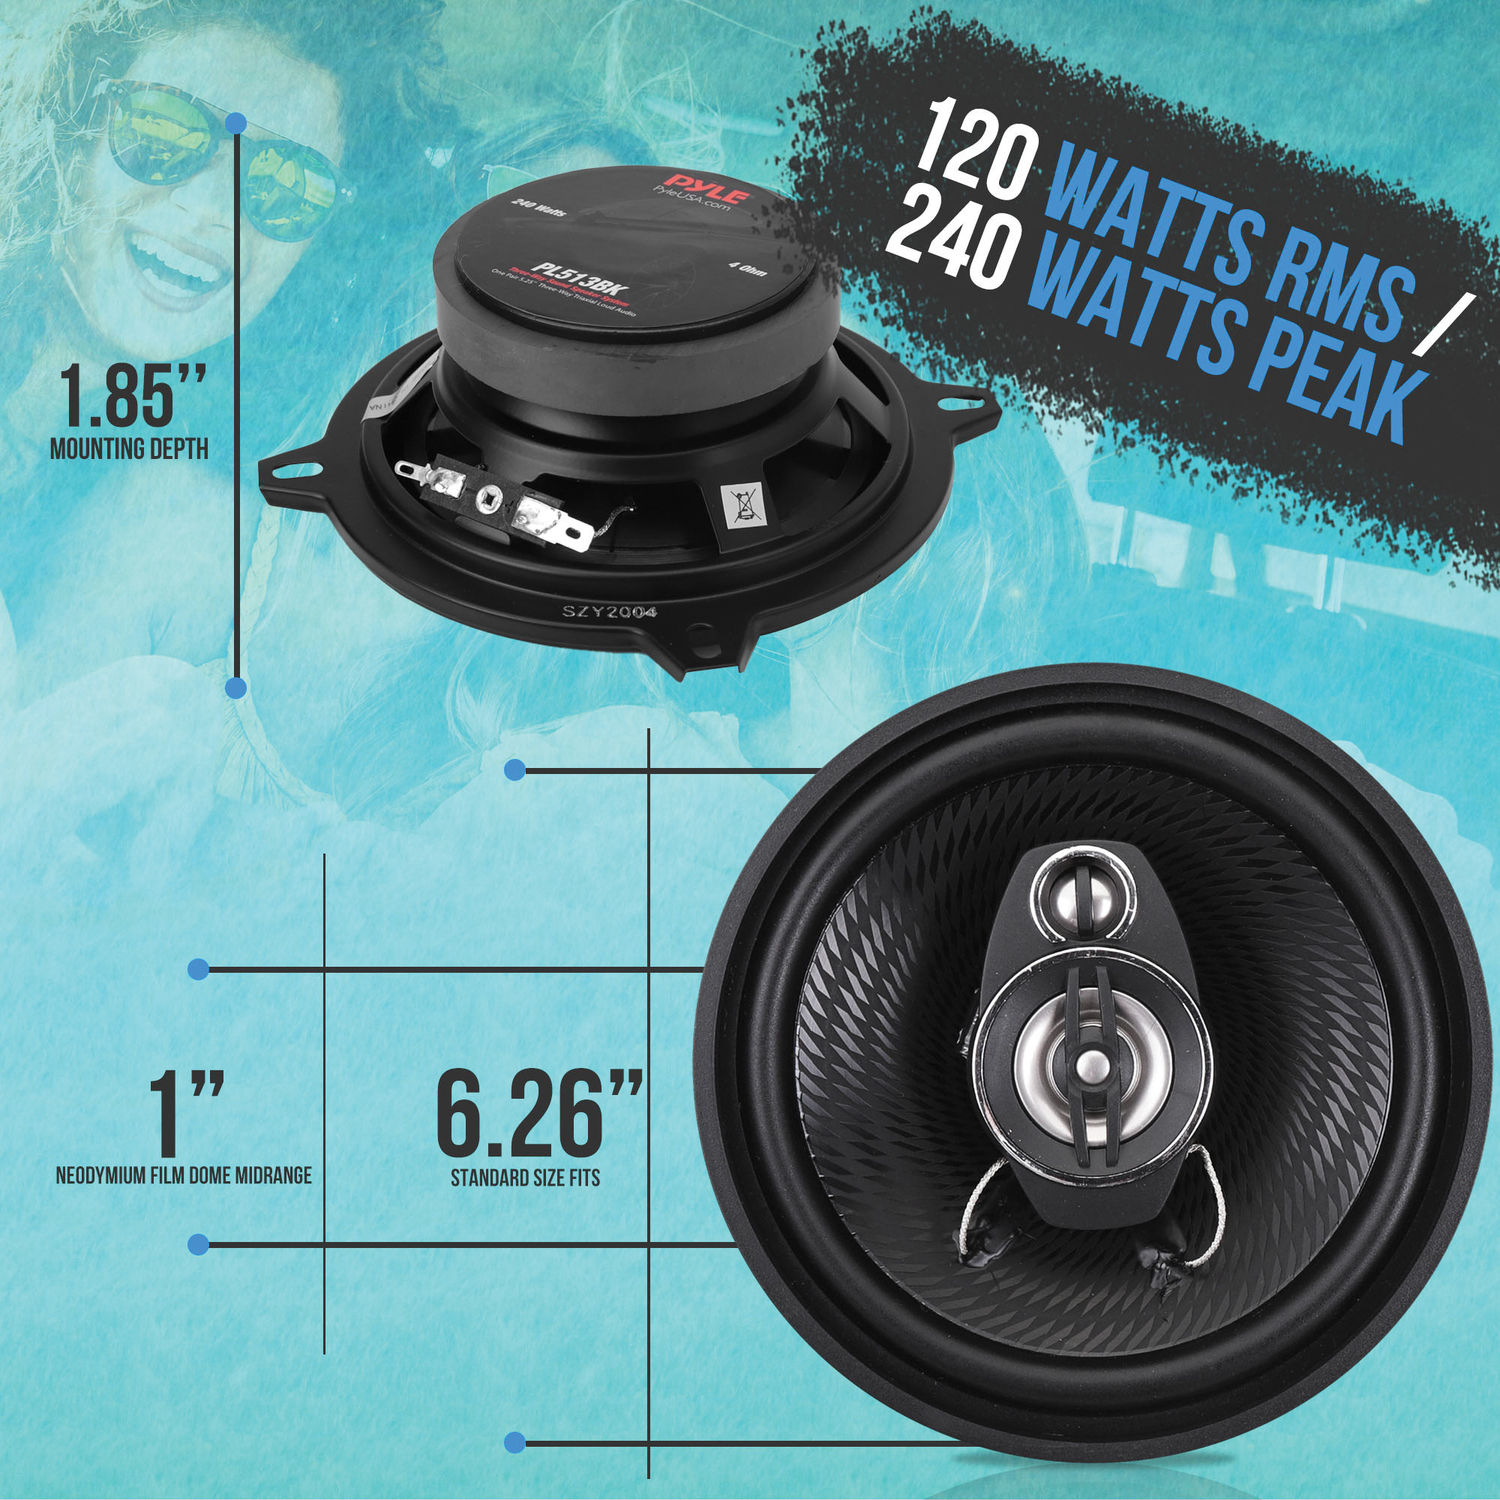 Pyle 2-Way Universal Car Stereo Speakers-120W 3.5 Inch Coaxial Loud Pro Audio Car Speaker (Black) - image 3 of 7